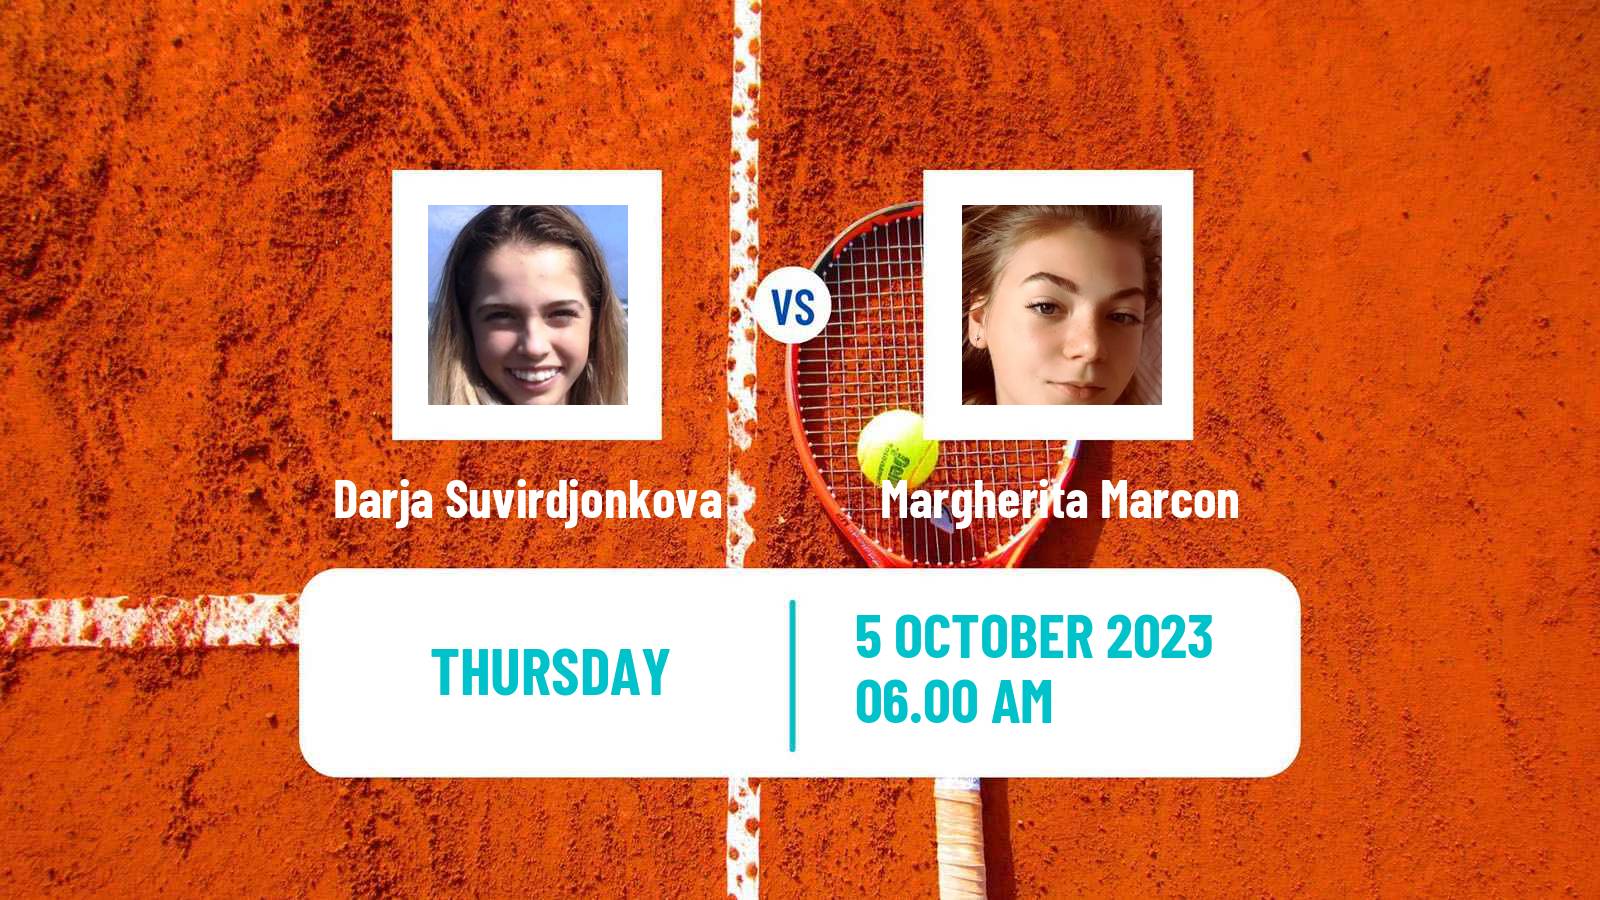 Tennis ITF W15 Sharm Elsheikh 13 Women Darja Suvirdjonkova - Margherita Marcon